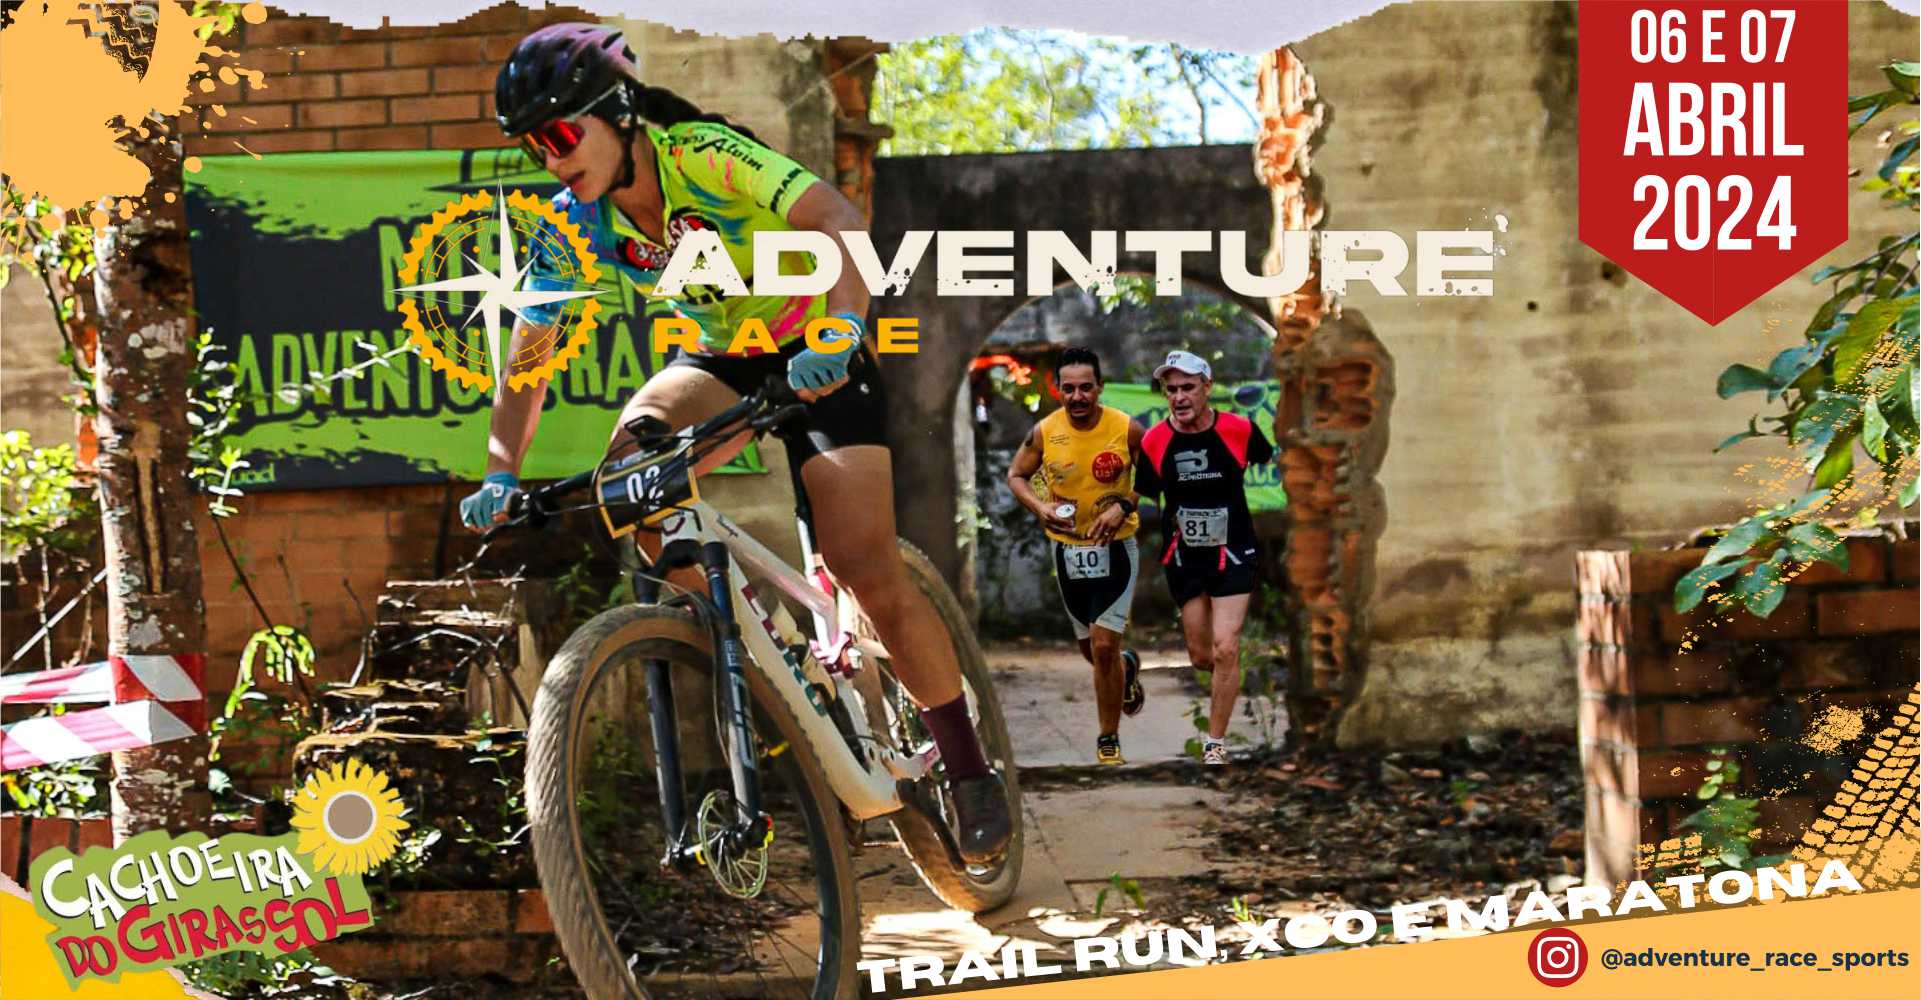 adventure-race-2024-banner